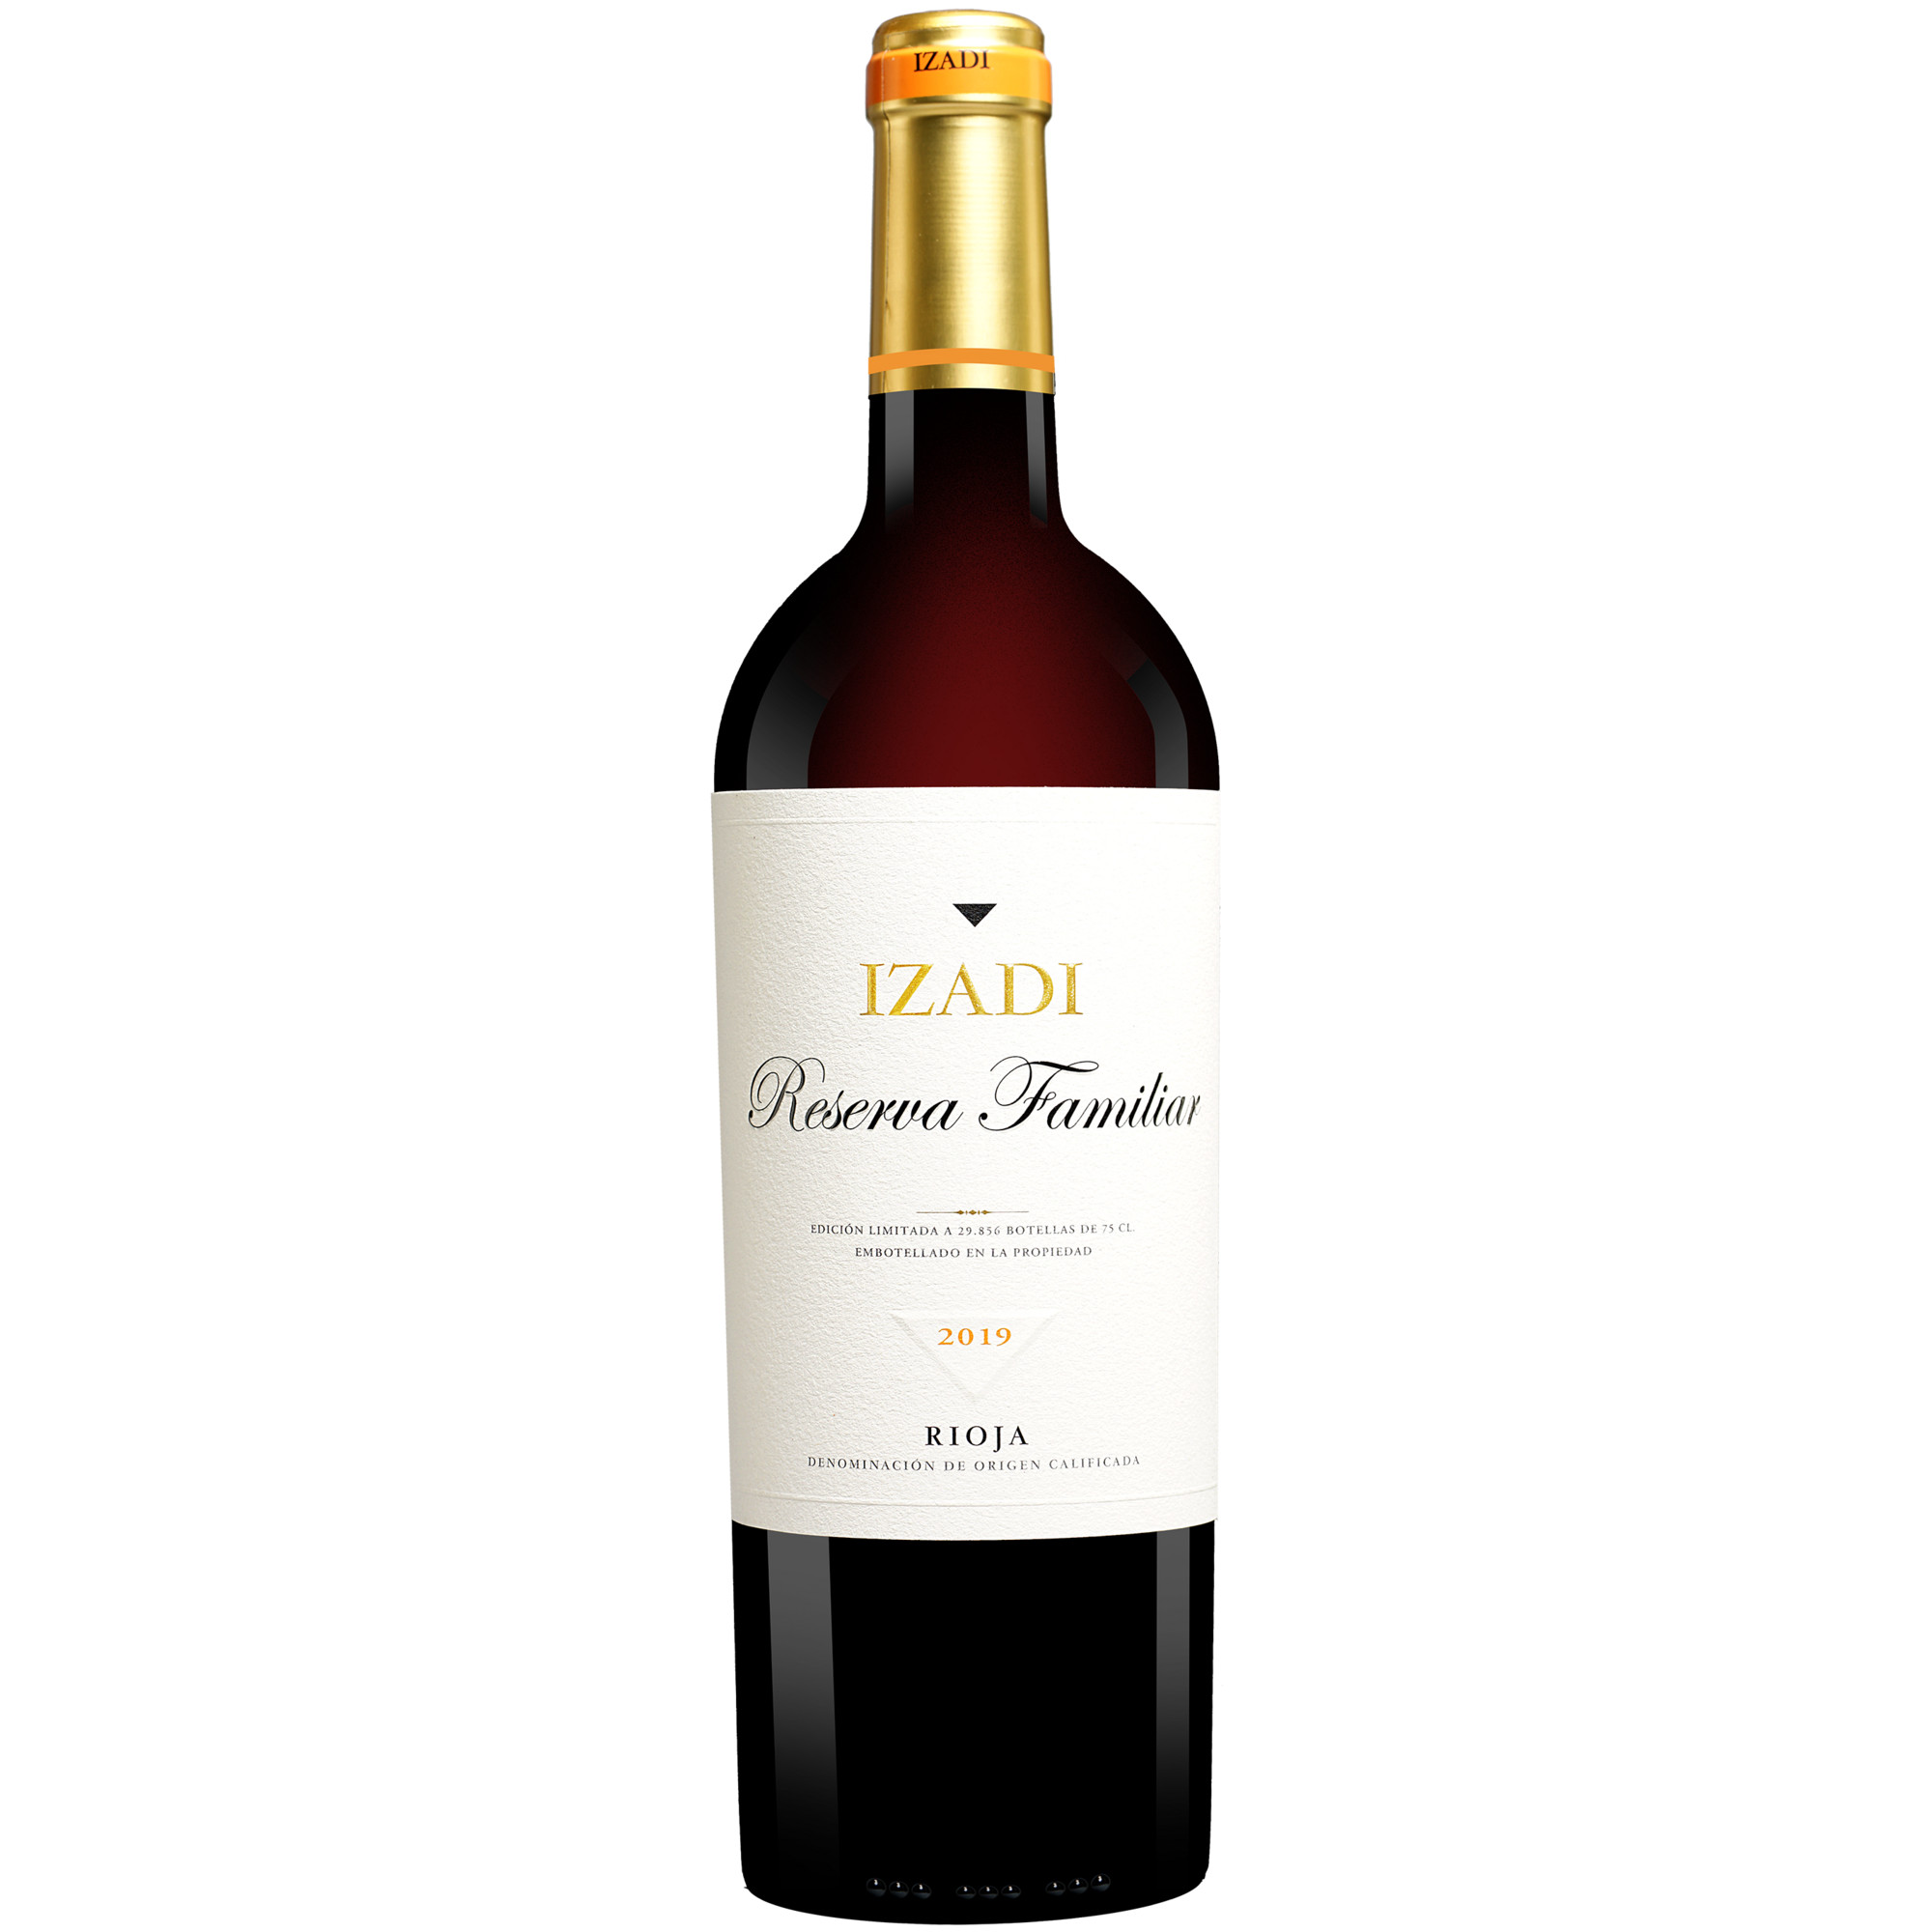 Izadi Tinto »Reserva Familiar« Reserva 2019  014.5% Vol. Rotwein Trocken aus Spanien